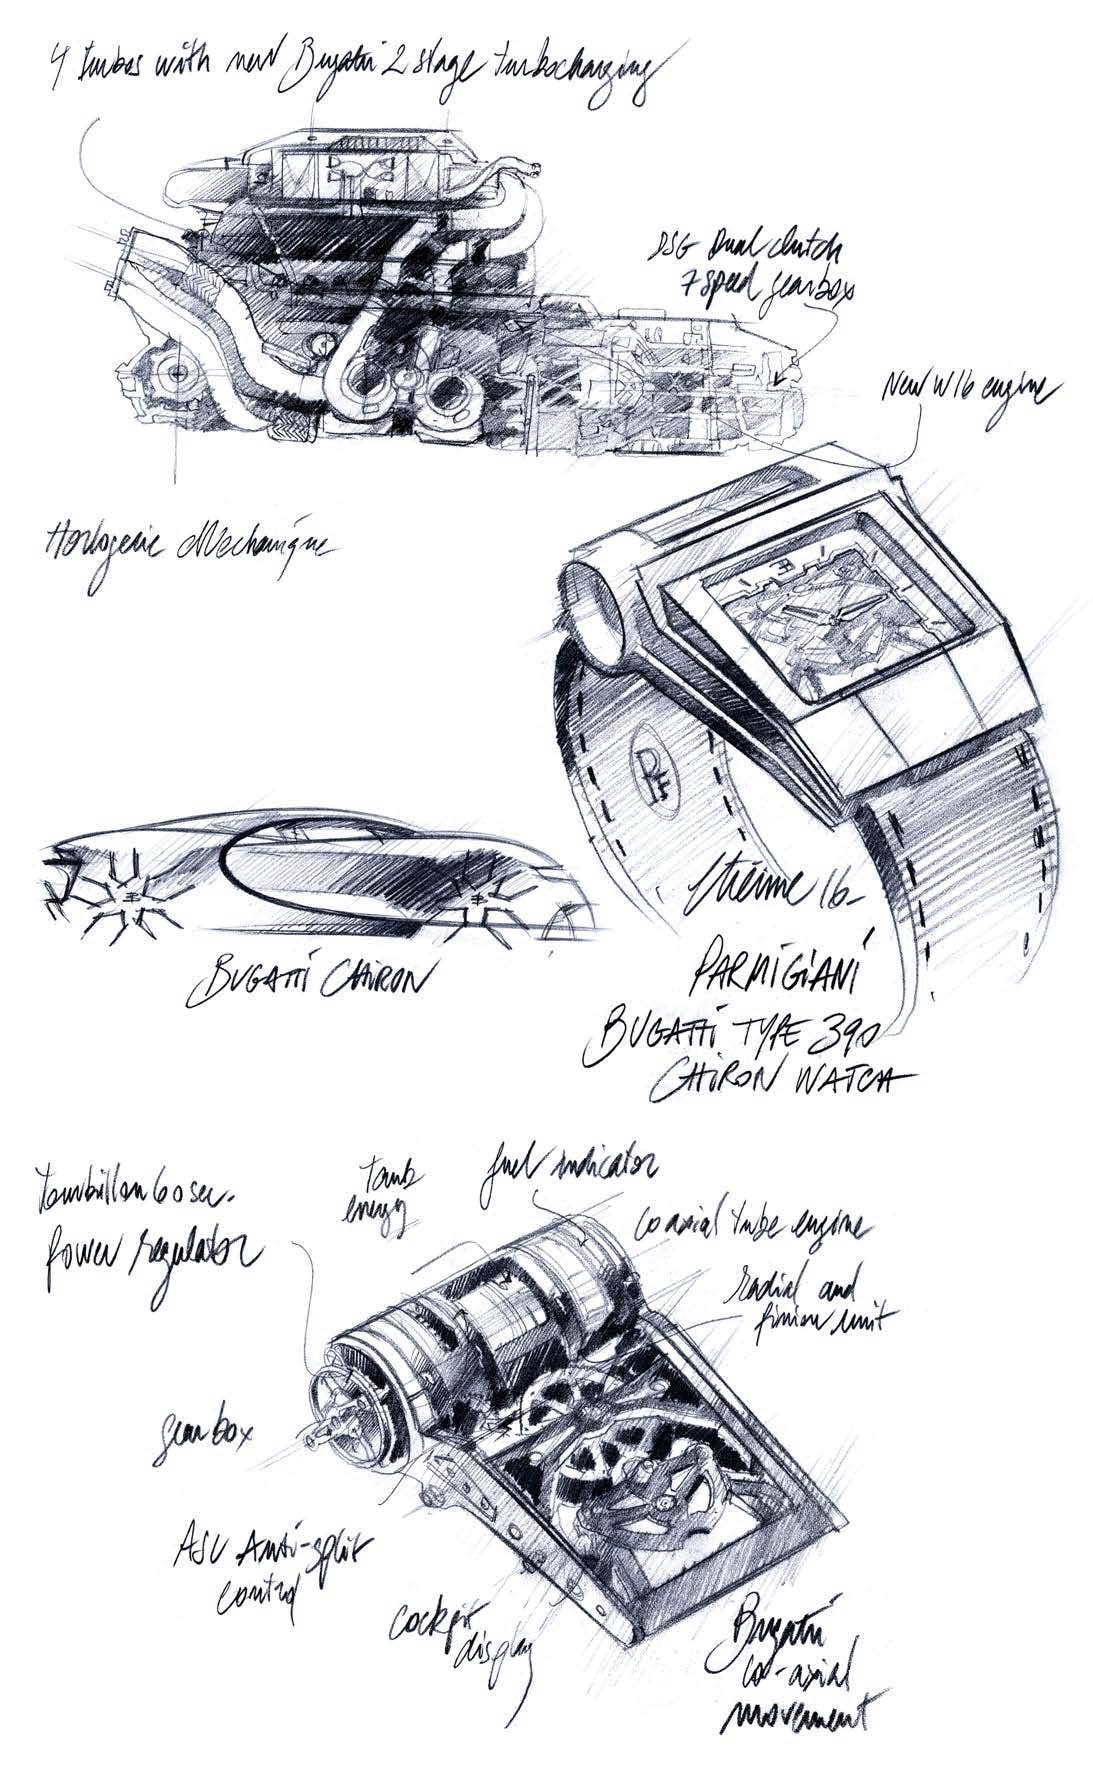 030916-bugatti-concept-watch-art-3.jpg